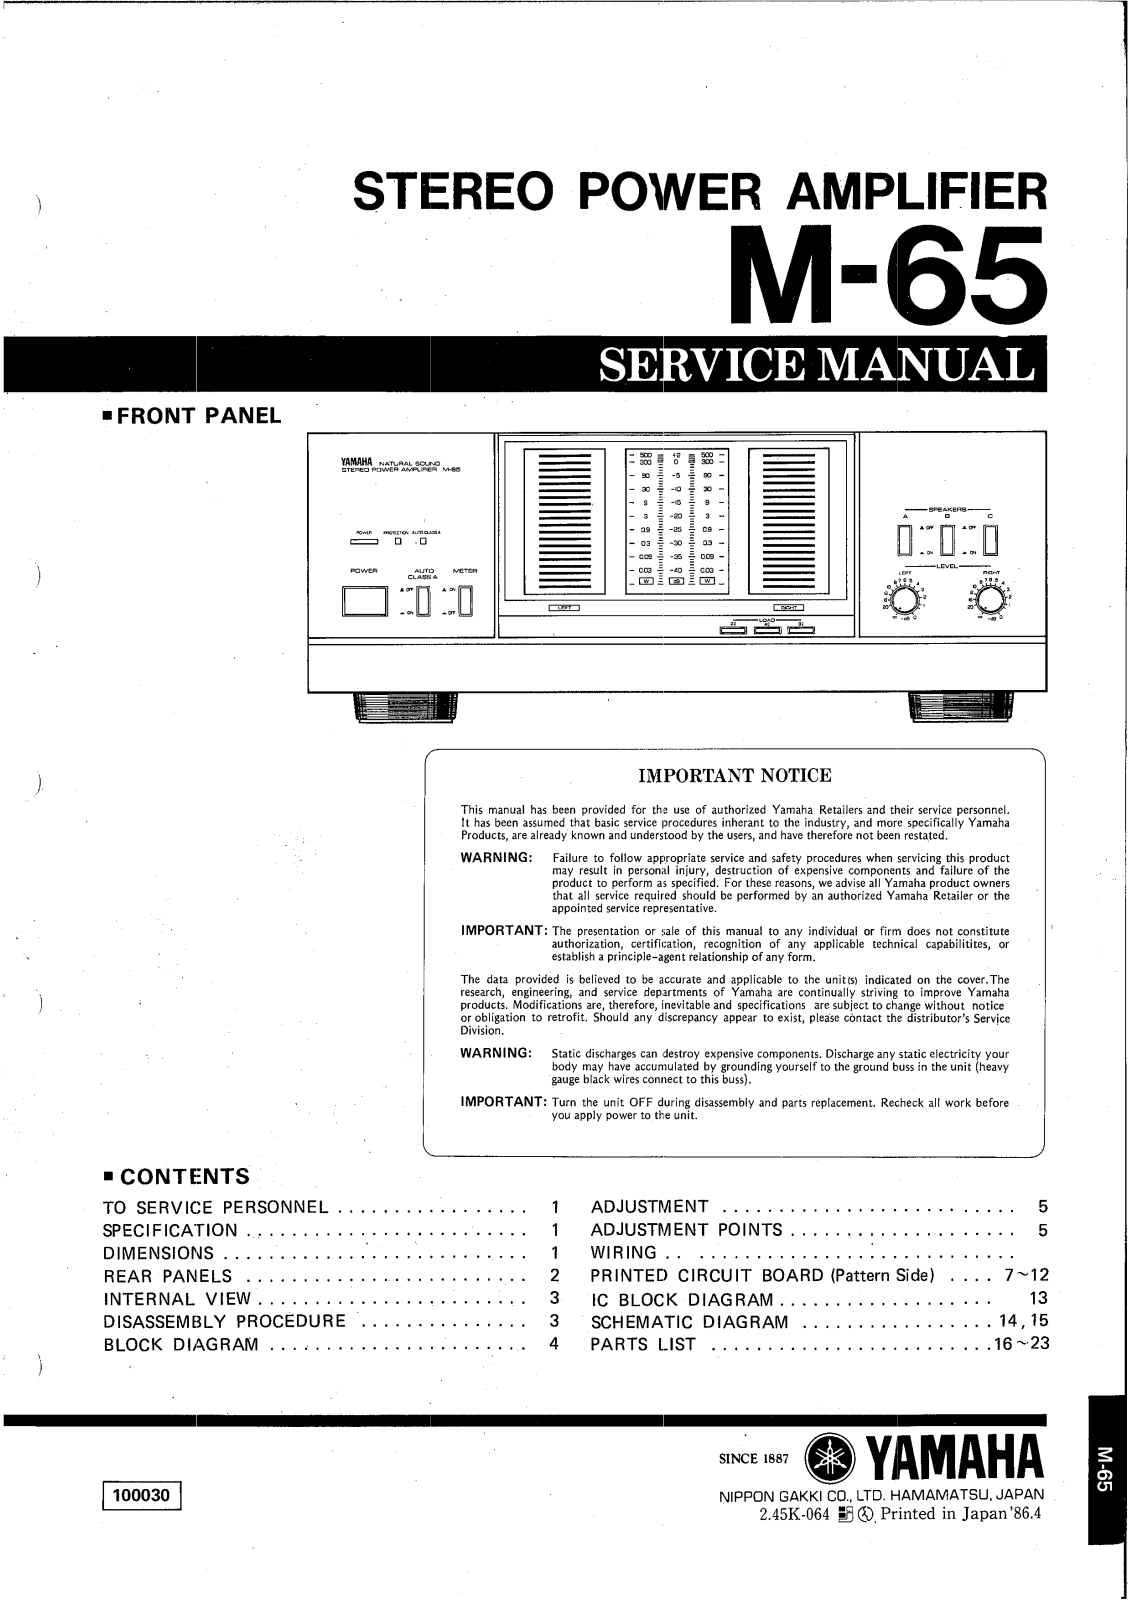 Yamaha M-65 Service manual